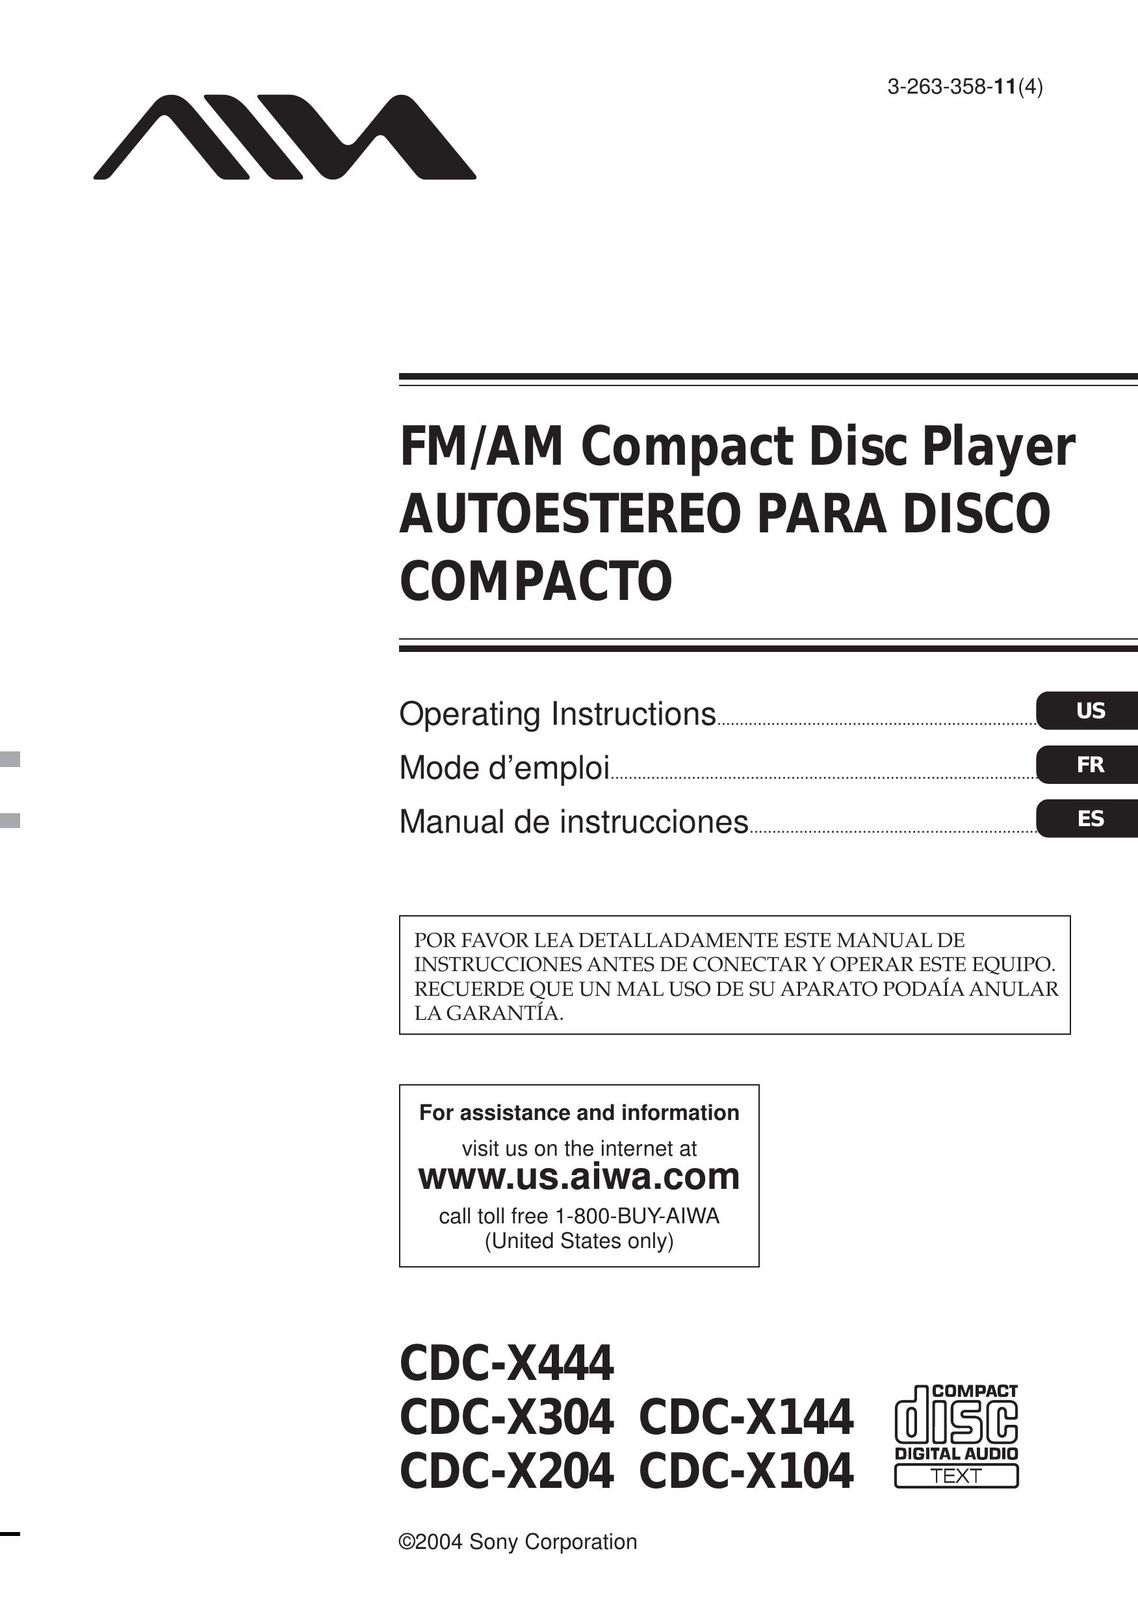 Sony CDC-X204 CD Player User Manual